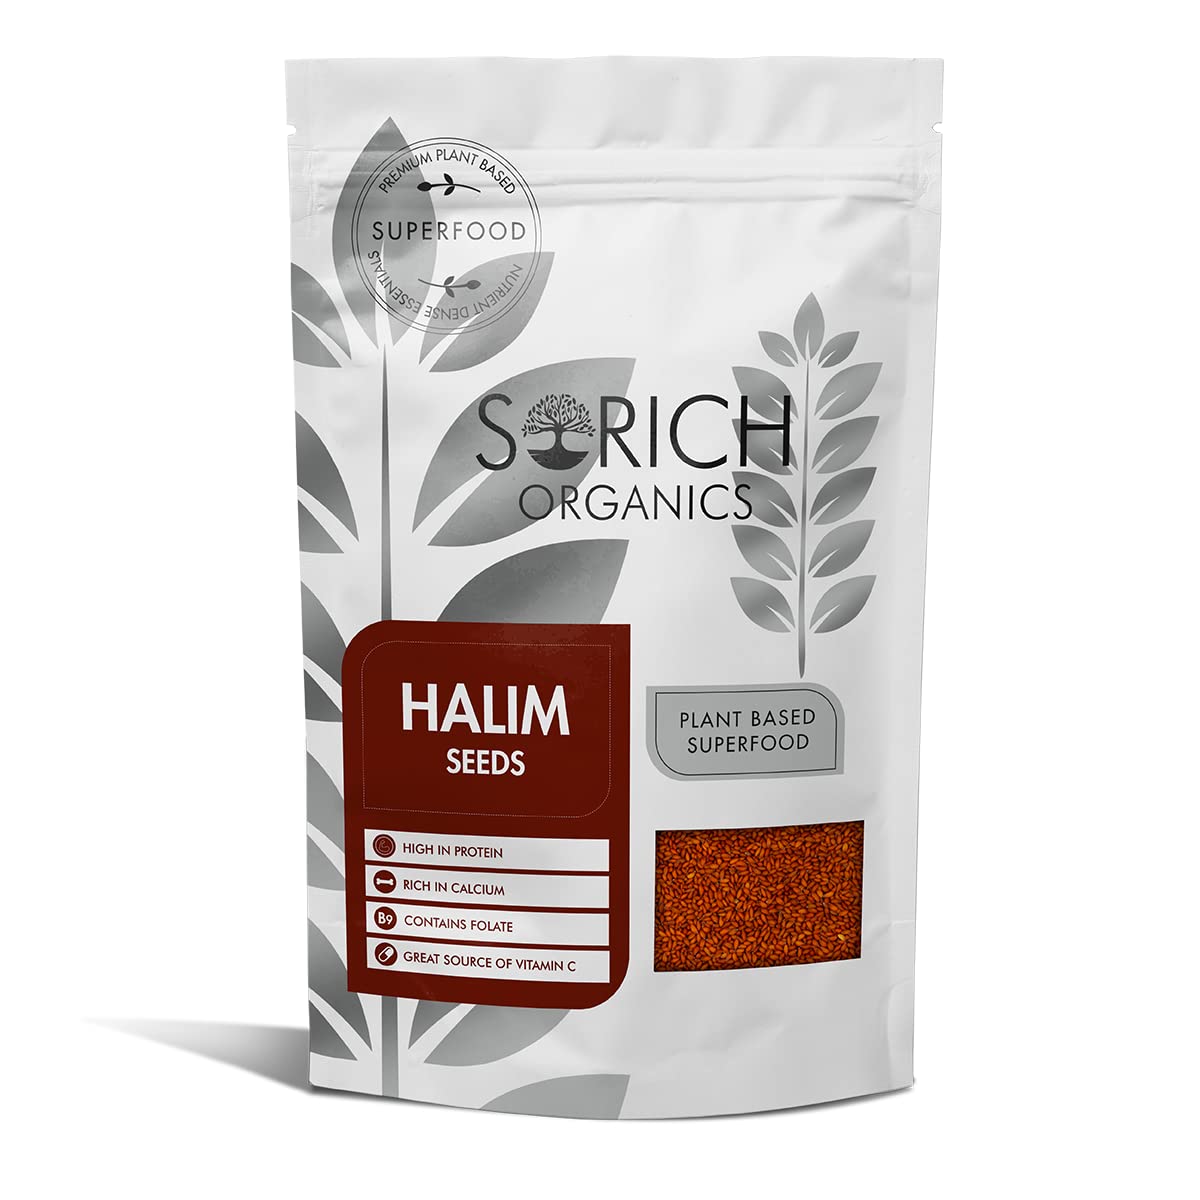 Sorich Organics Halim Seeds - 200 GM